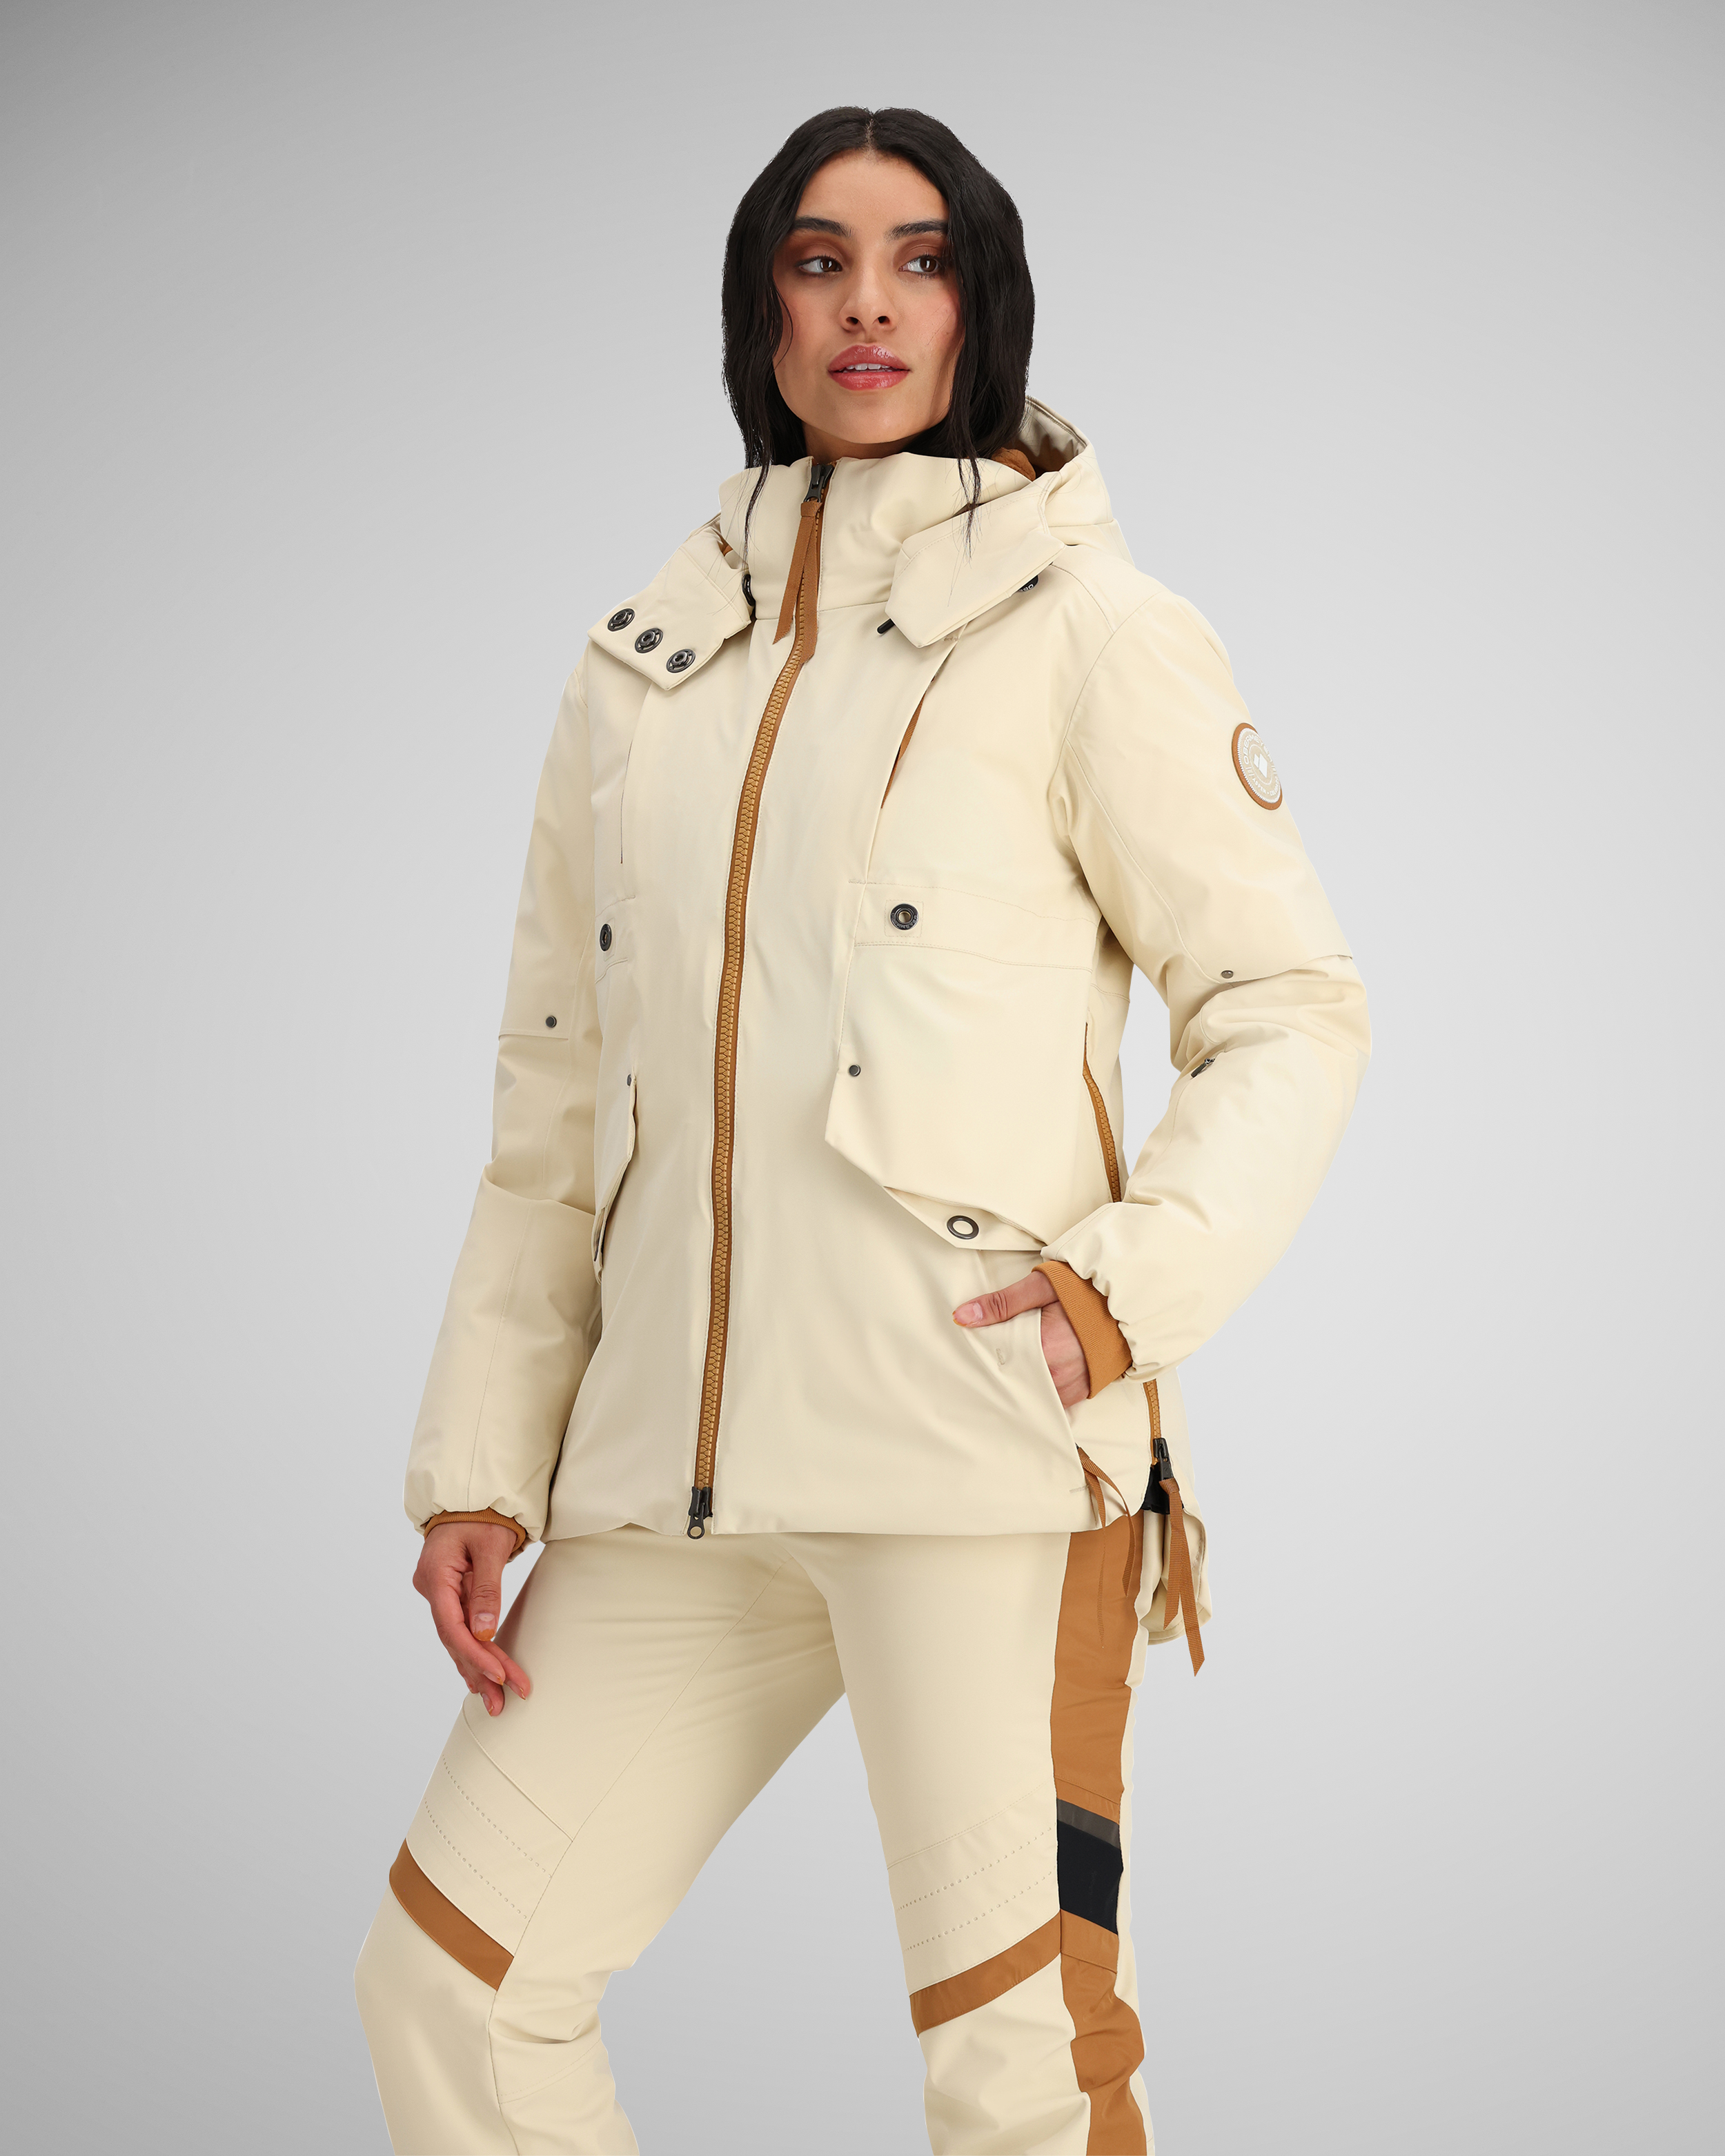 Obermeyer Tuscany II Insulated Jacket - Women's Petite Sizes | REI Co-op